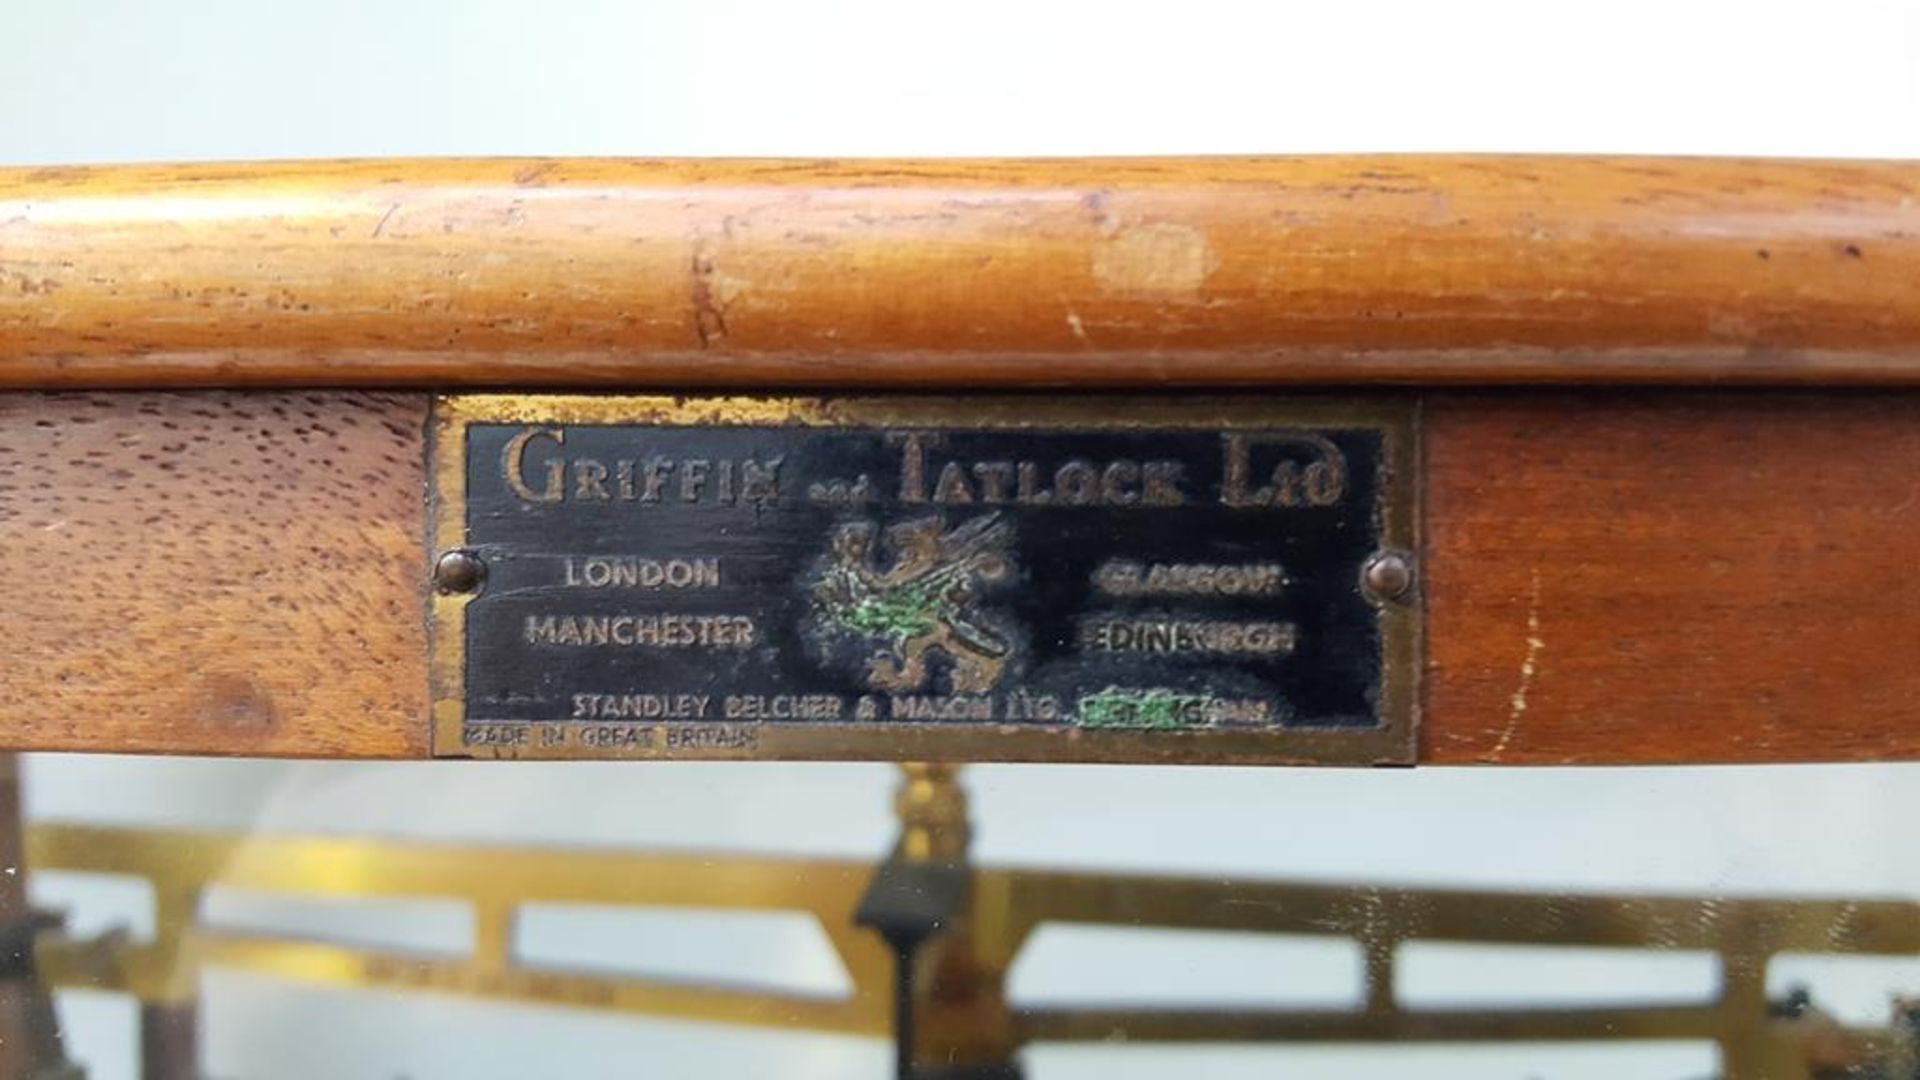 A Griffin & Tatlock set of brass Counter-Balance Scales in Display Case (est £40-£60) - Bild 2 aus 3